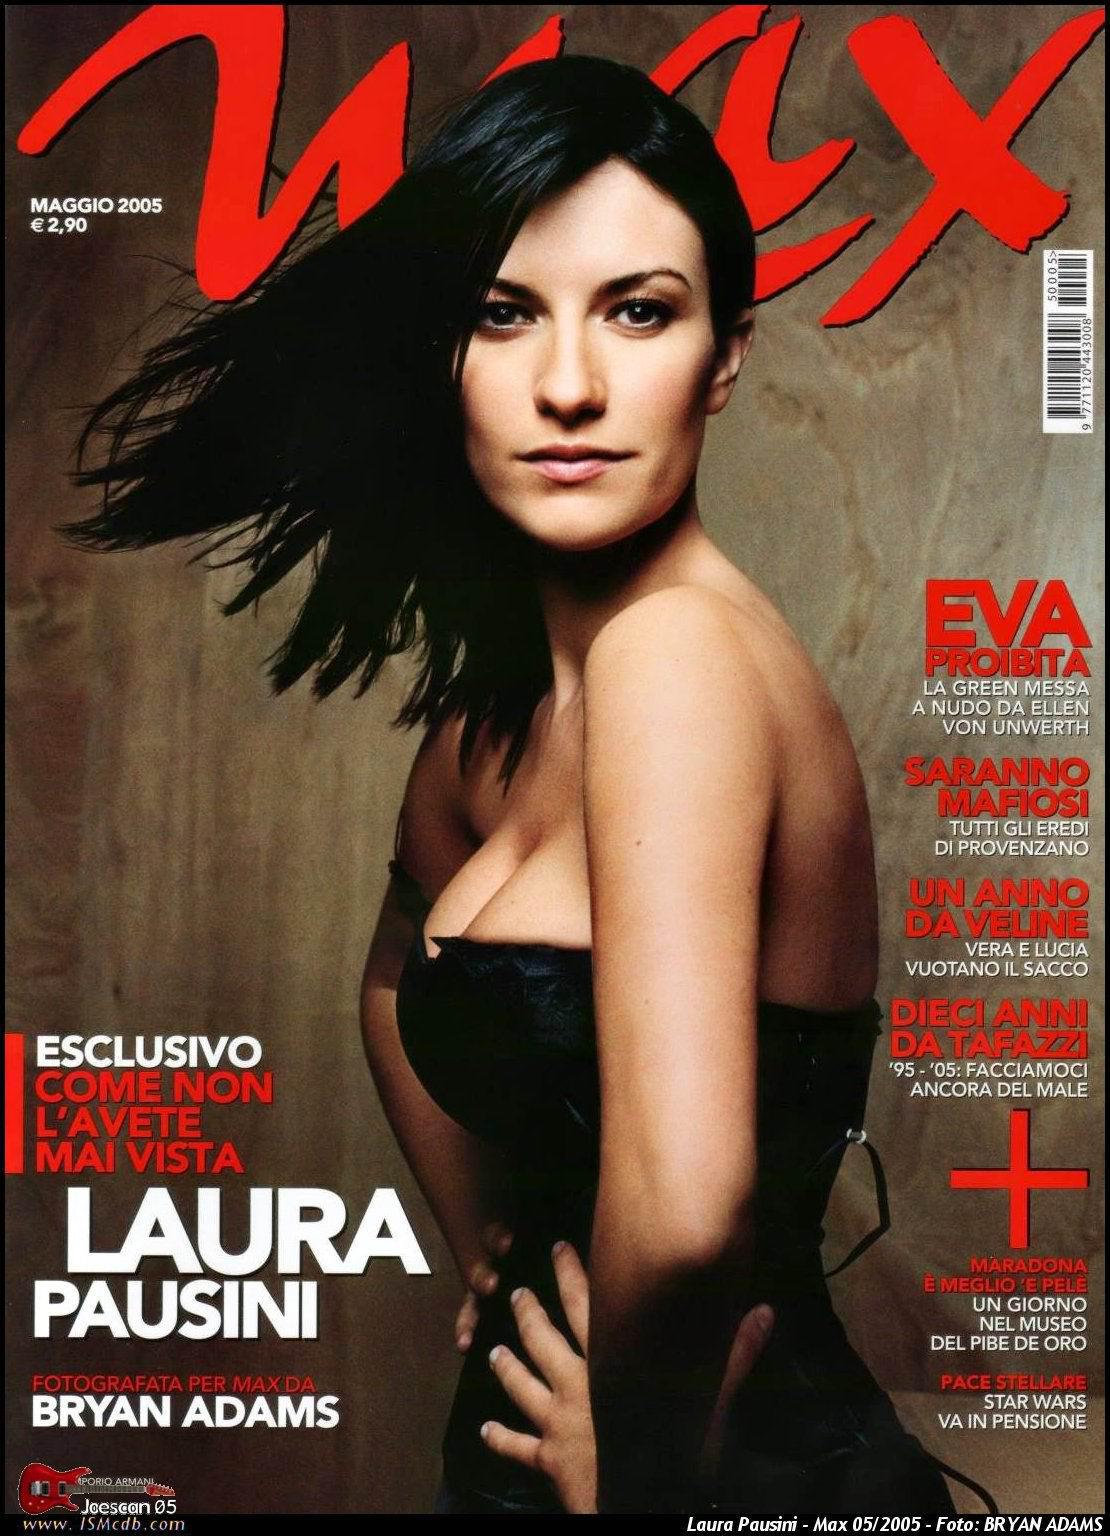 Fotos de Laura Pausini desnuda - Página 1 - Fotos de Famosas.TK.